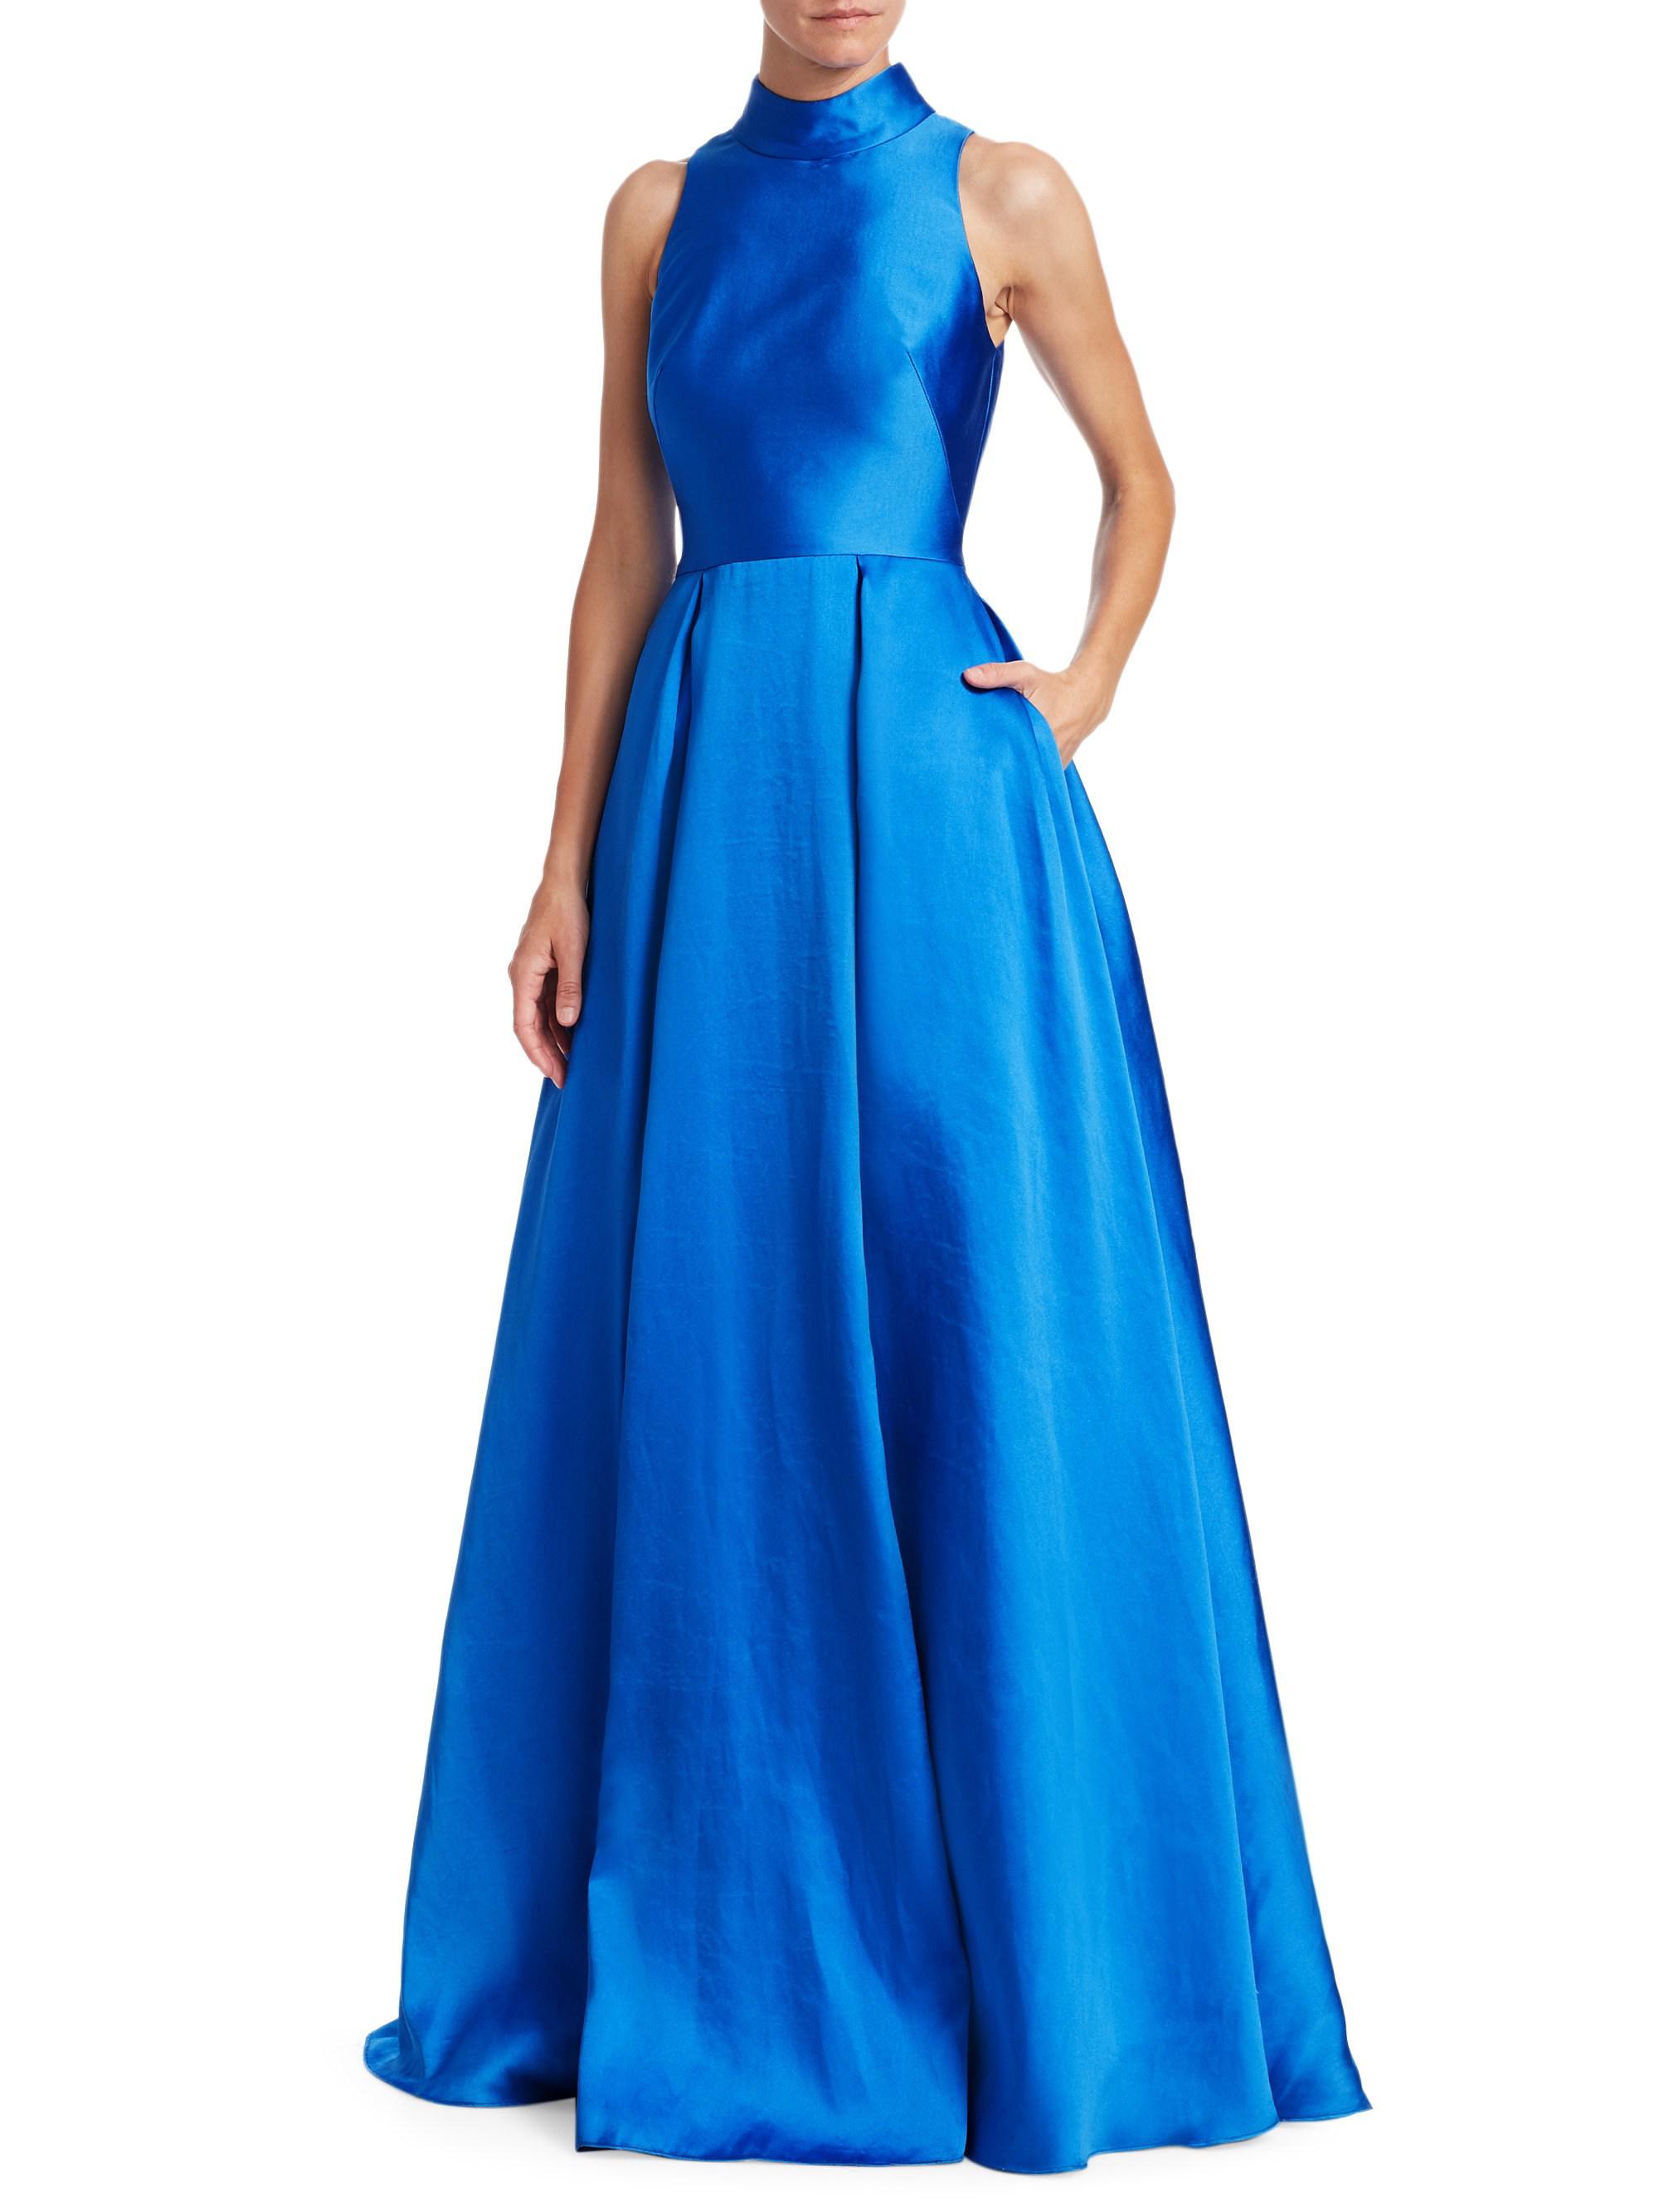 ML Monique Lhuillier Satin Collared Ball Gown in Cobalt Blue (Blue) - Lyst